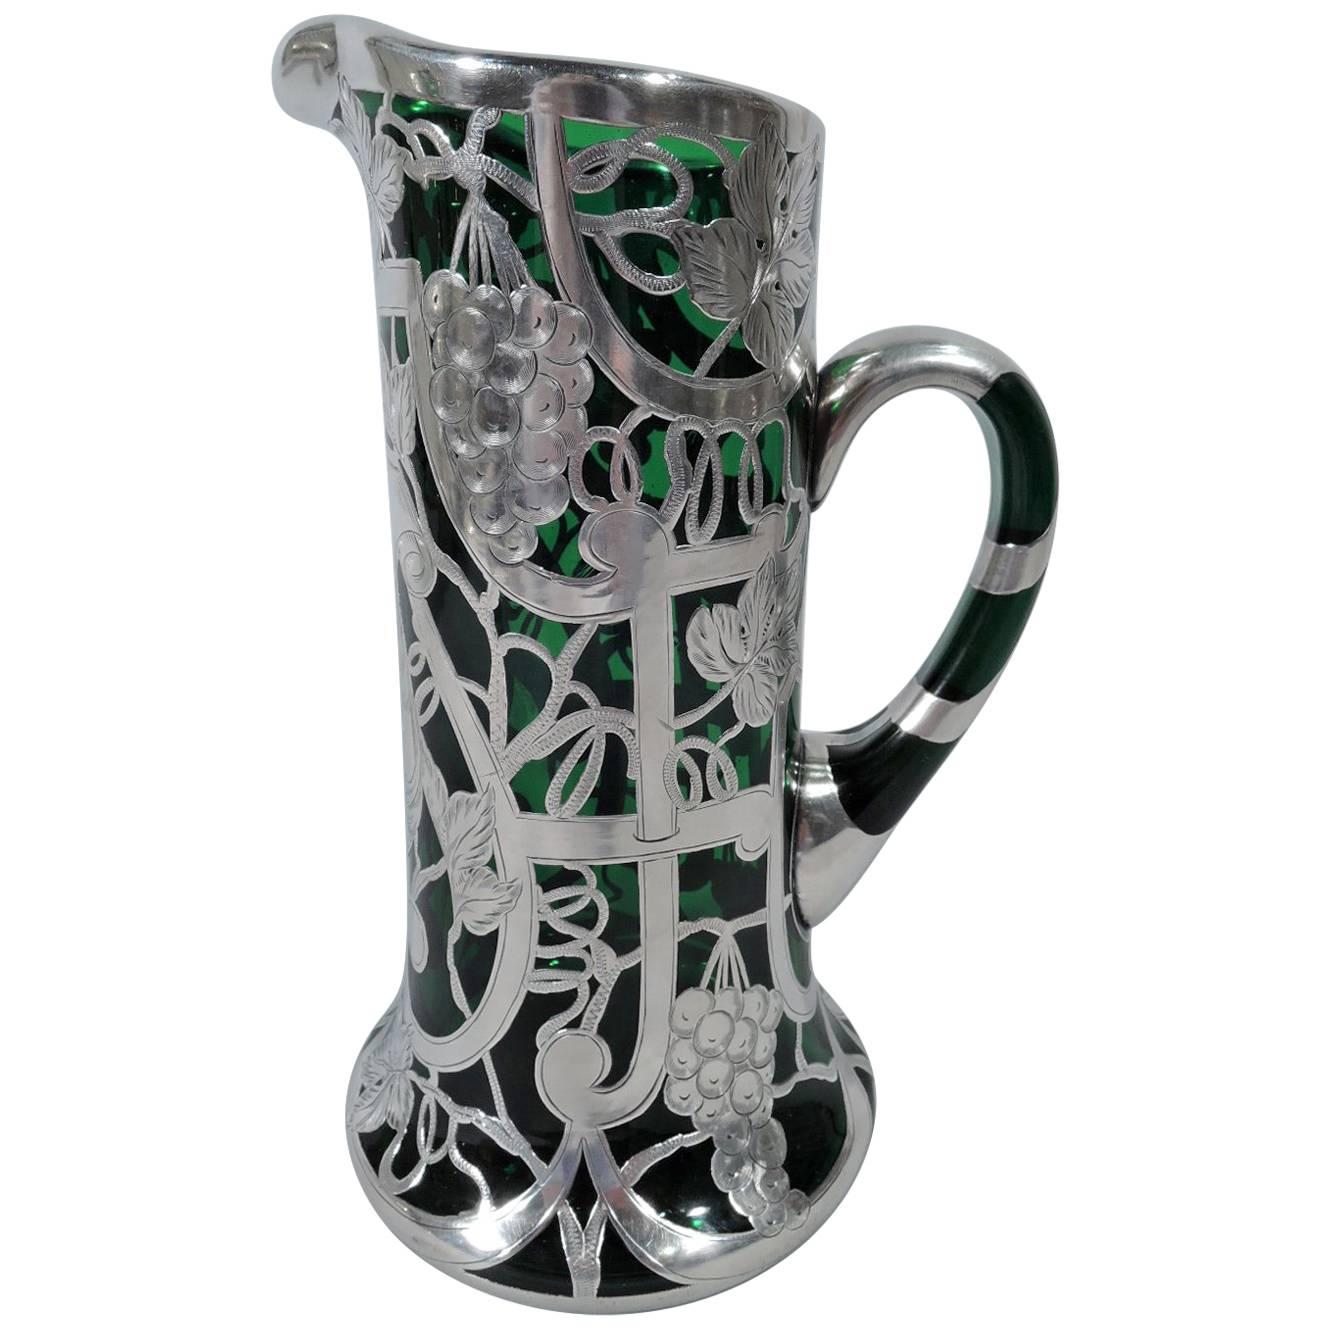 American Art Nouveau Emerald Green Glass Silver Overlay Claret Jug